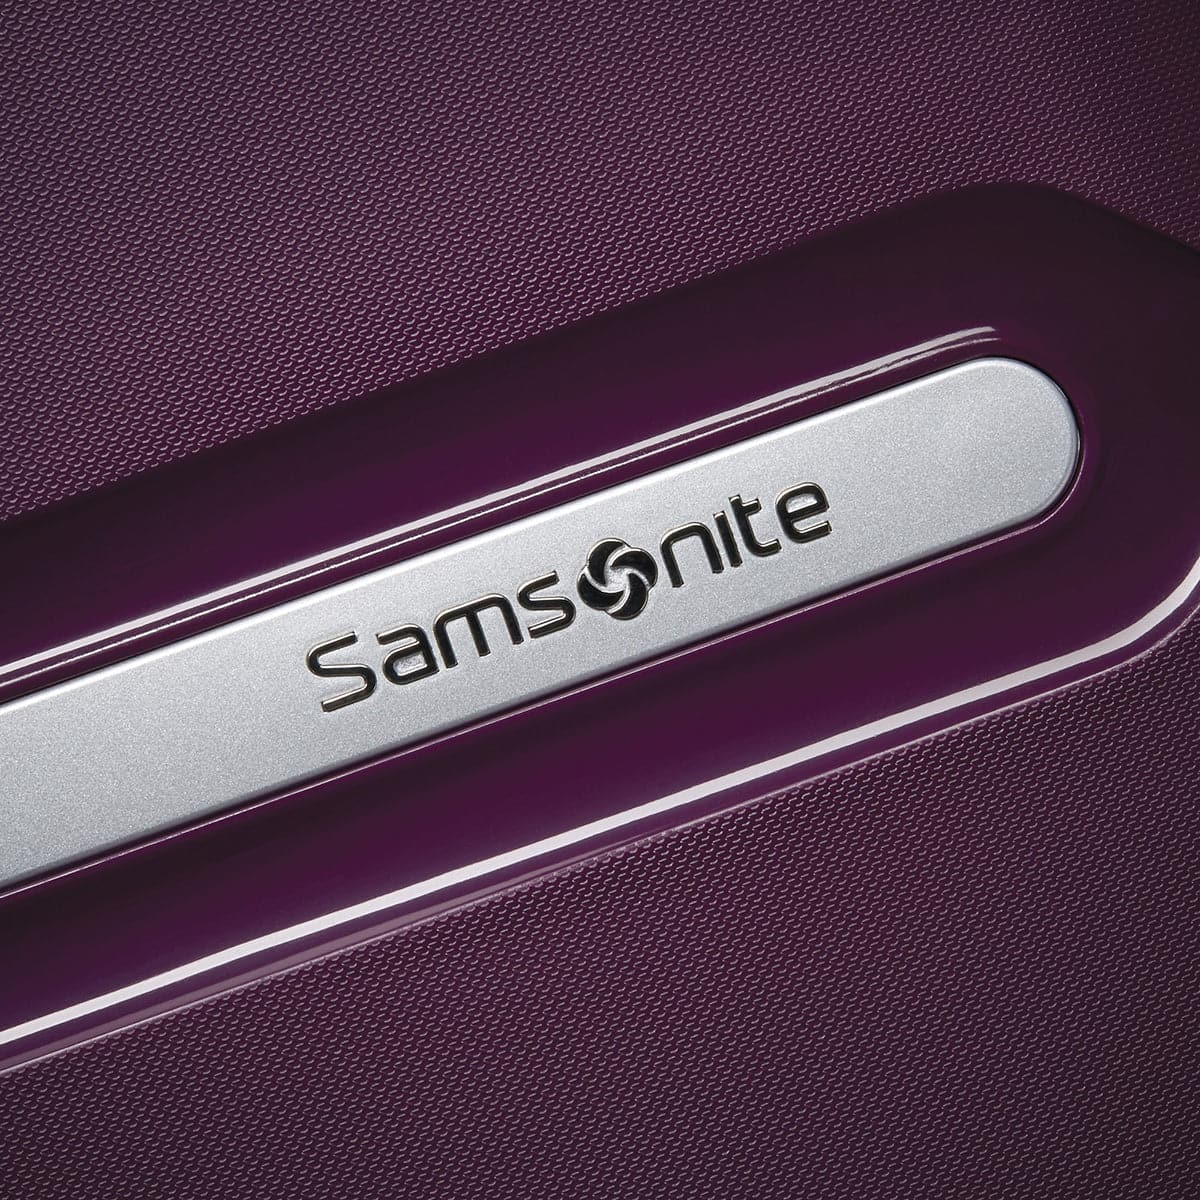 Samsonite Freeform 21" Hardside Spinner Luggage